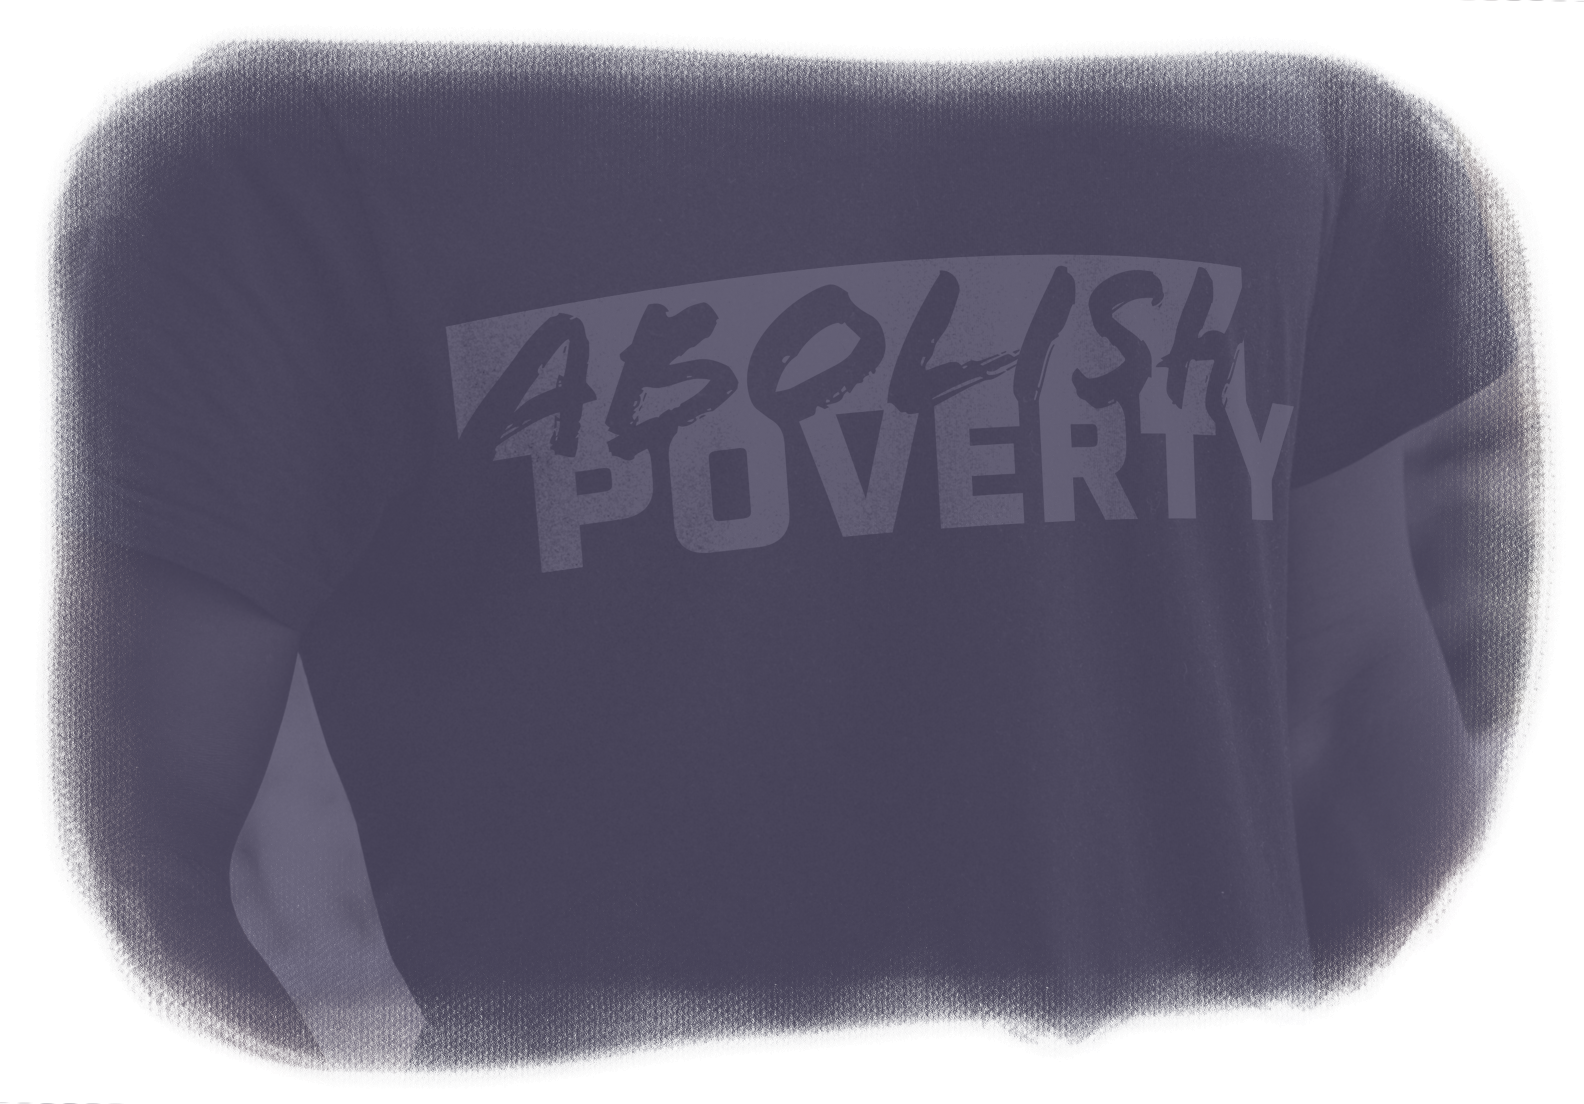 Abolish Poverty PAC